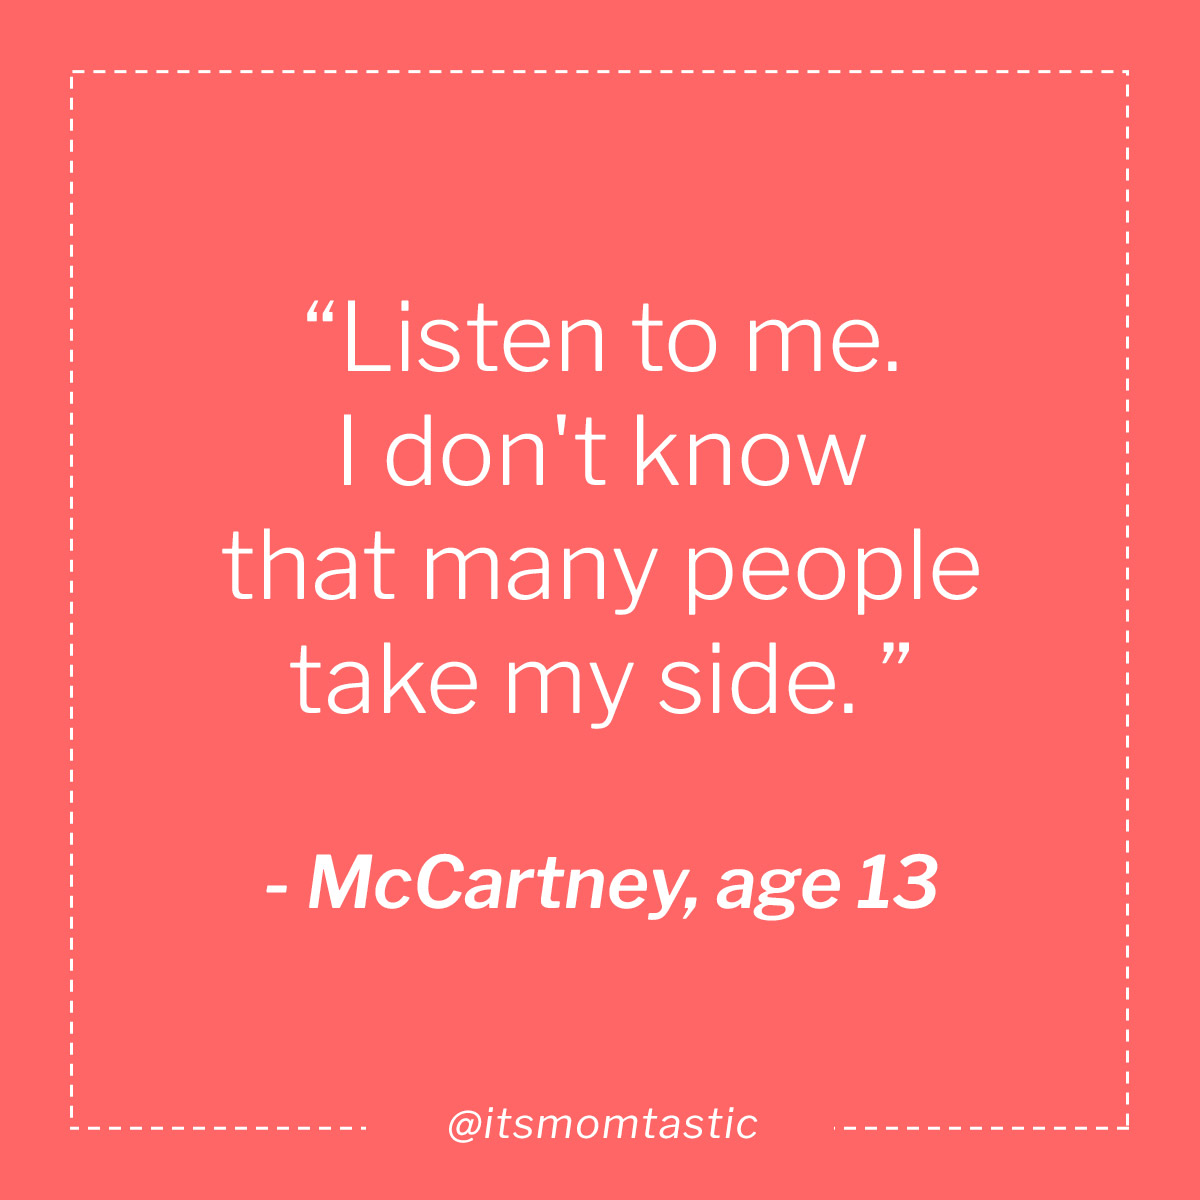 McCartney, age 13